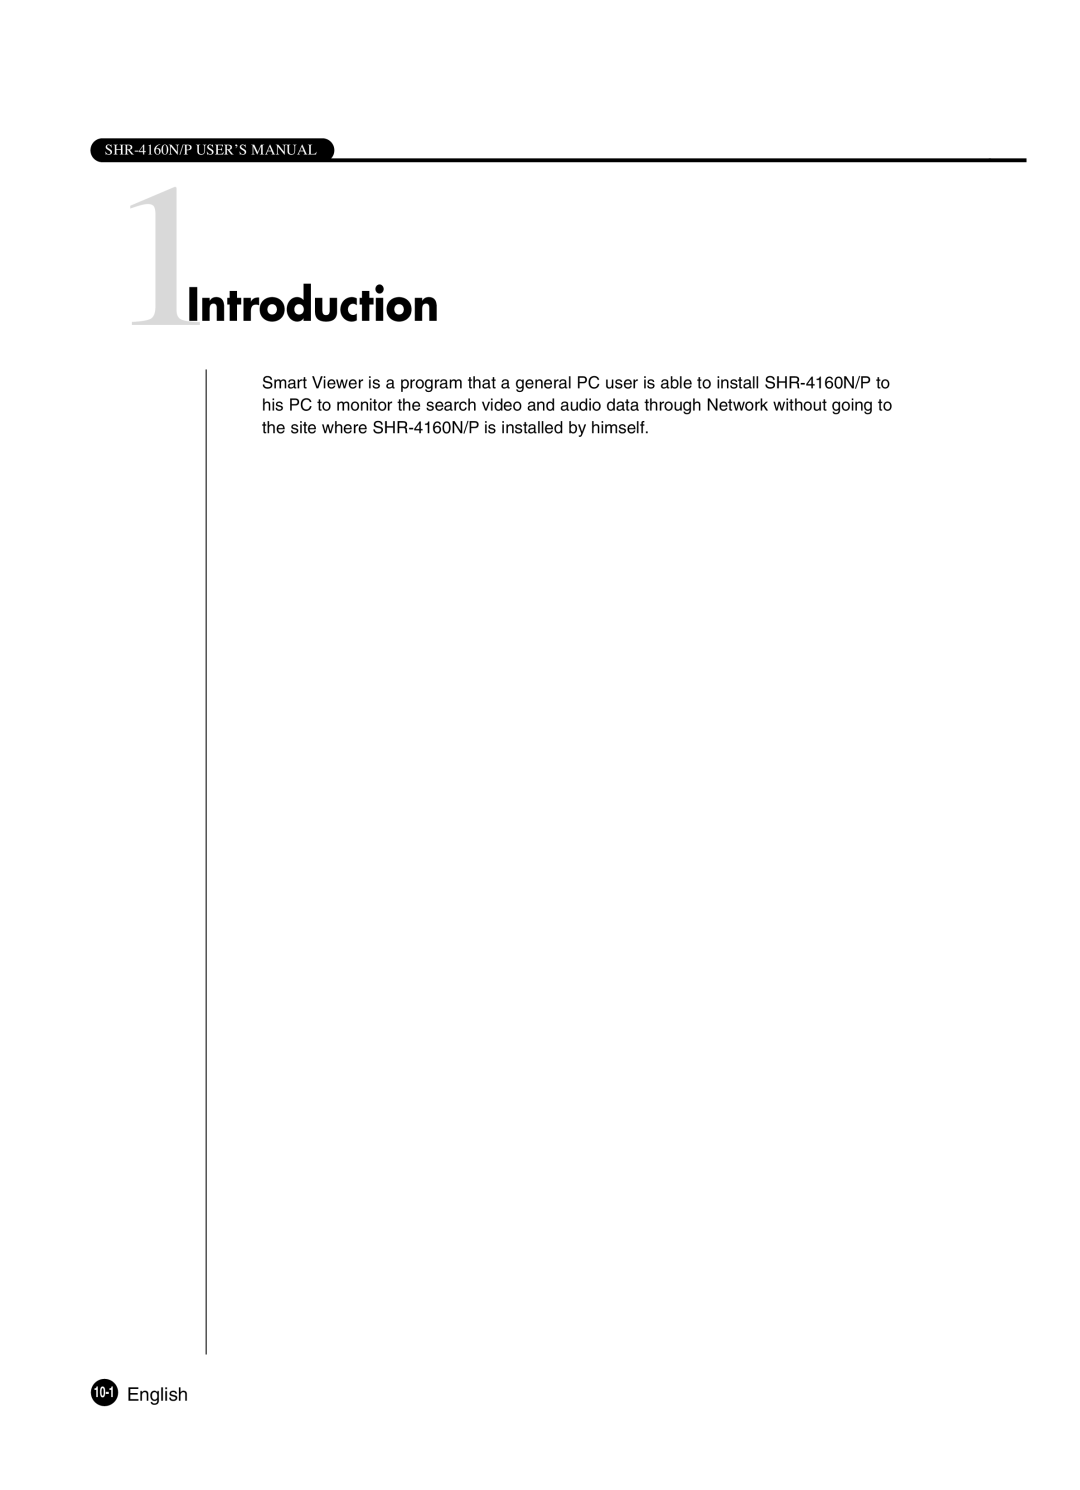 Samsung SHR-4160P manual 1Introduction, 10-1English 